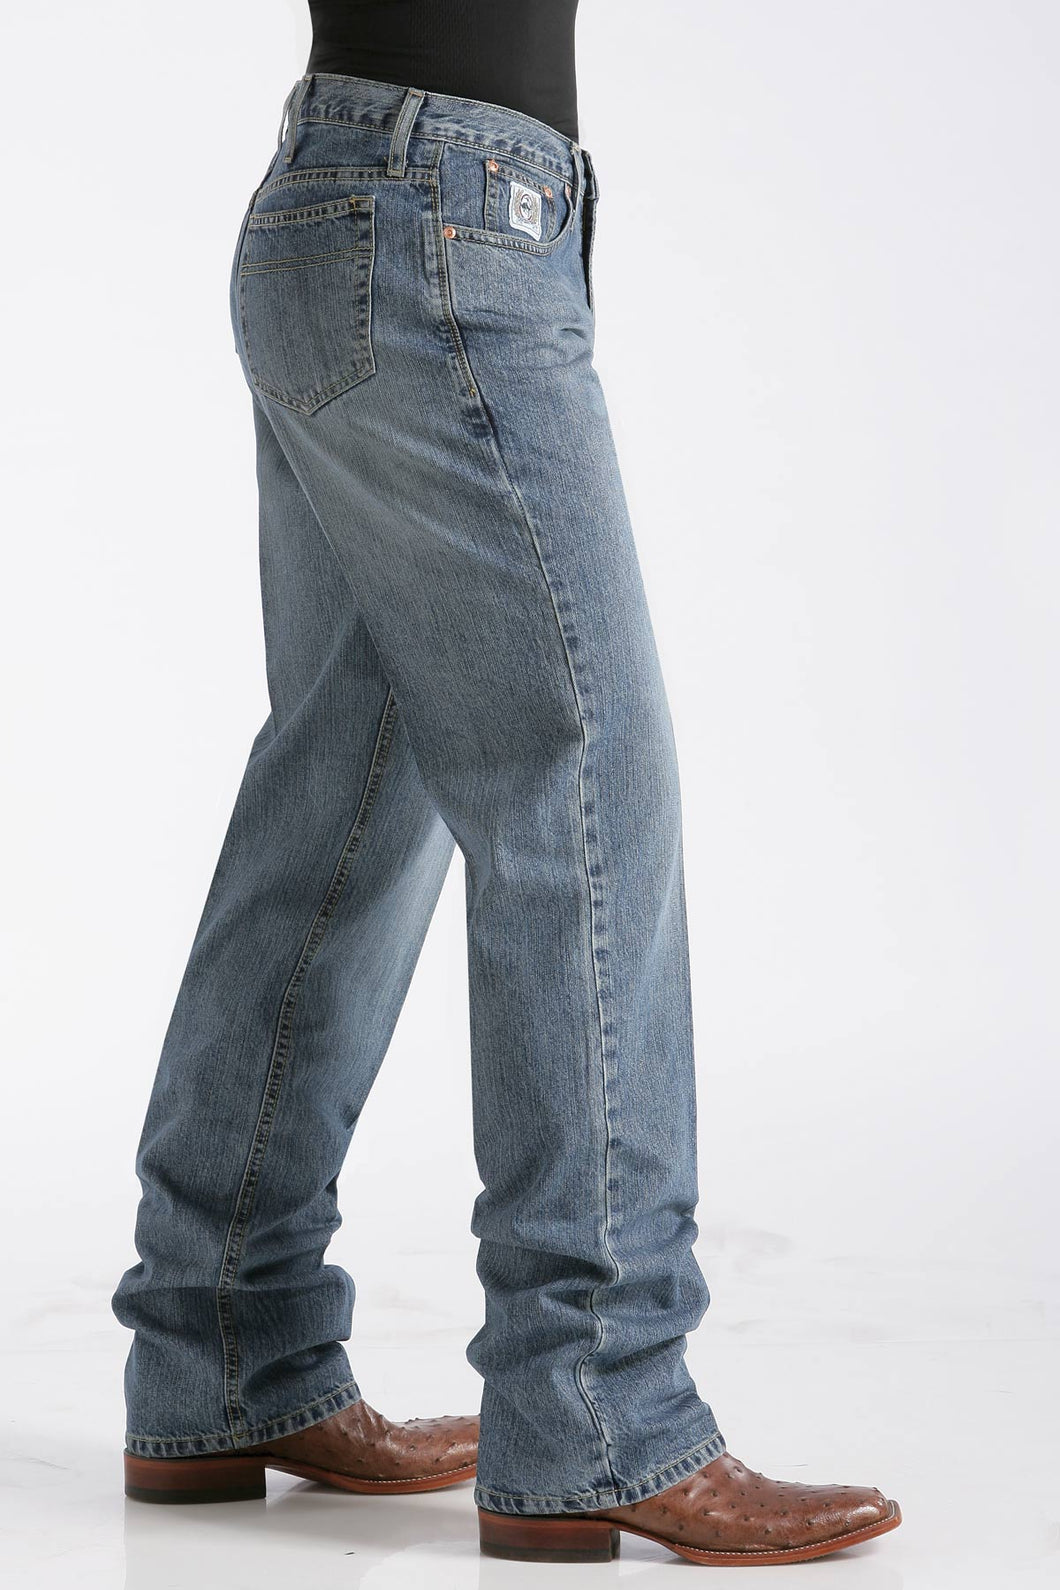 CINCH - Mens White Label Jeans